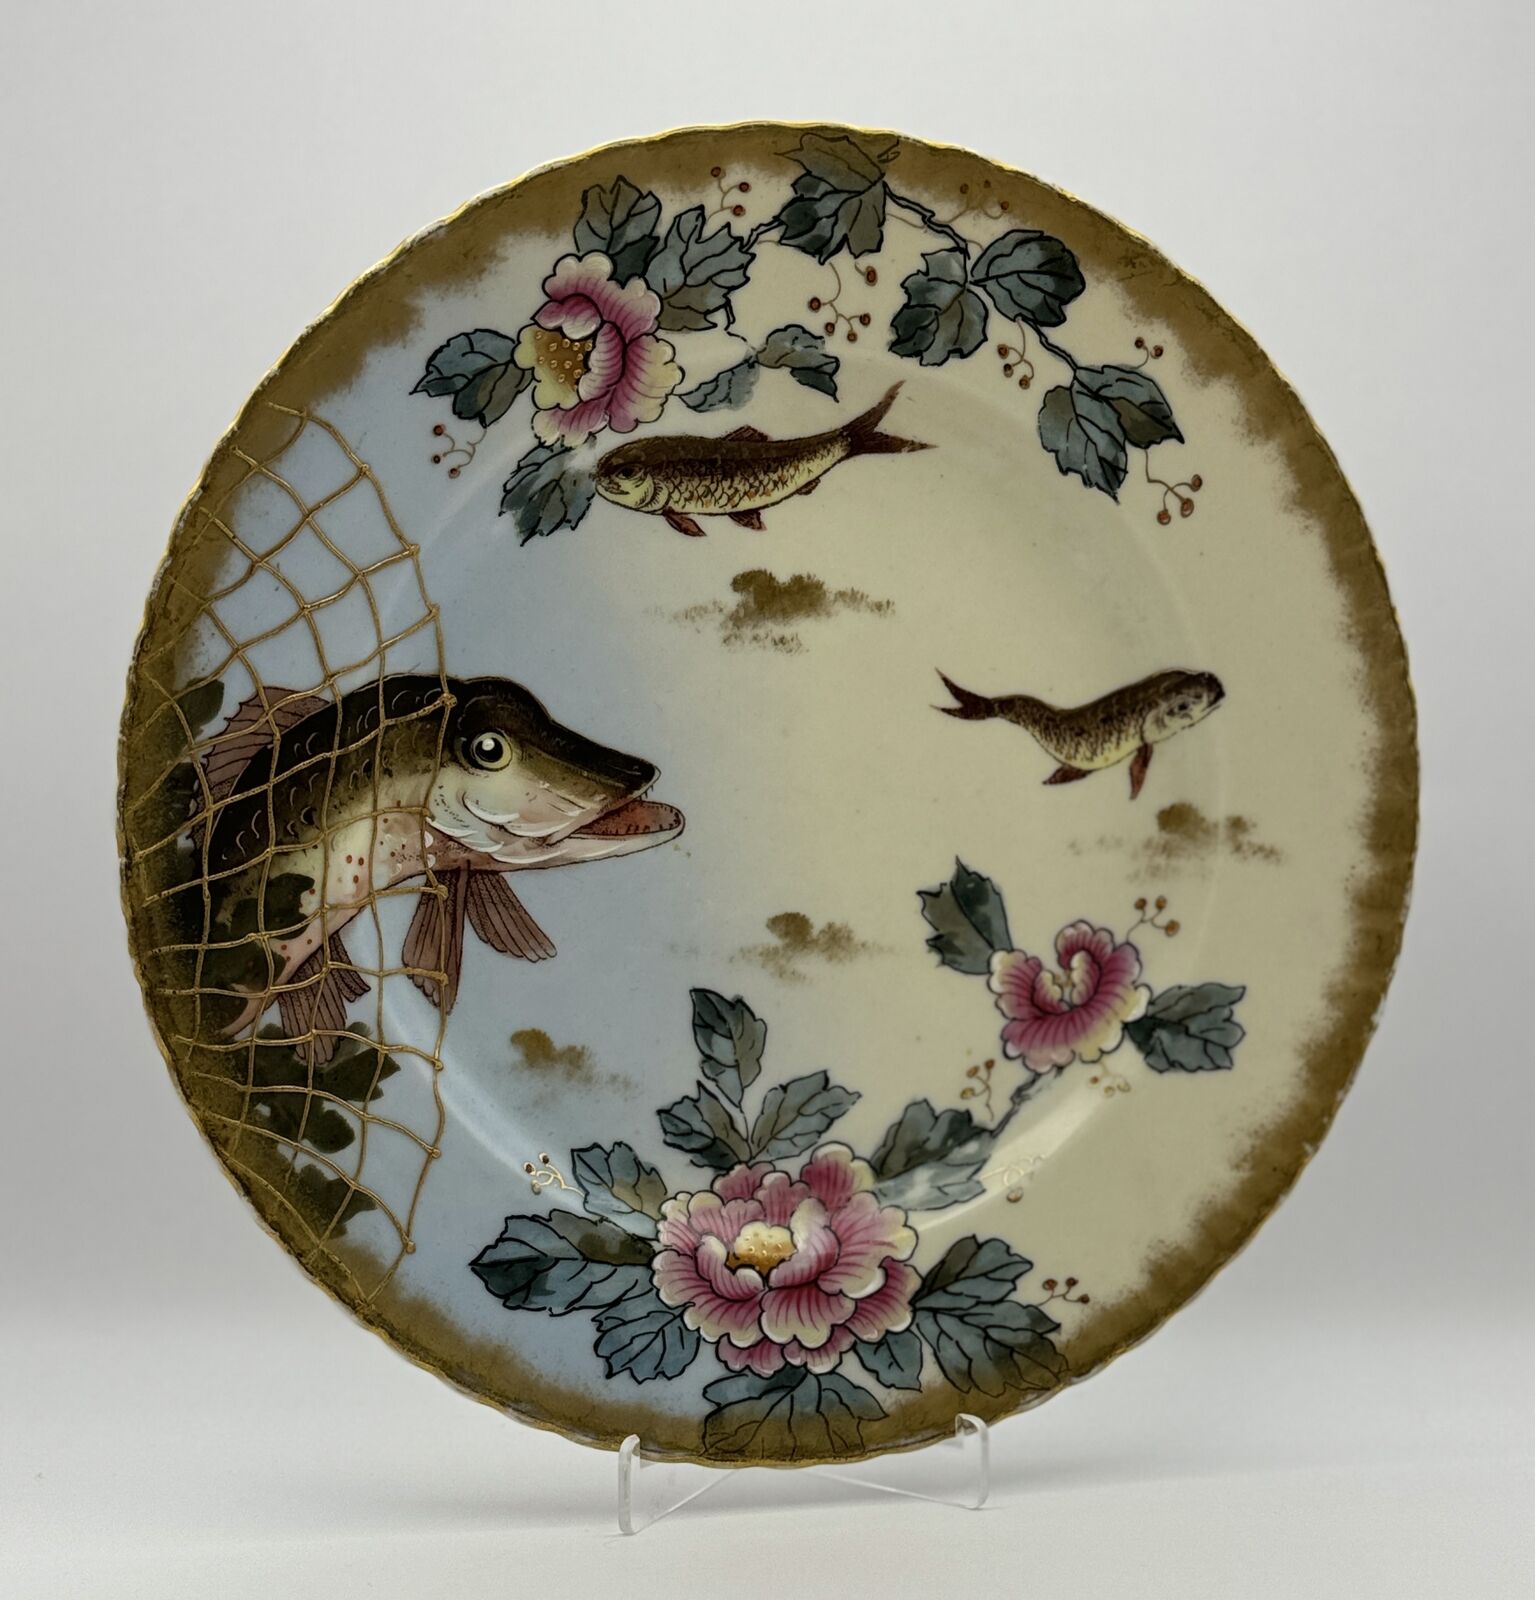 Rare Victoria Austria Plate - Hand-Painted Fish & Floral Design